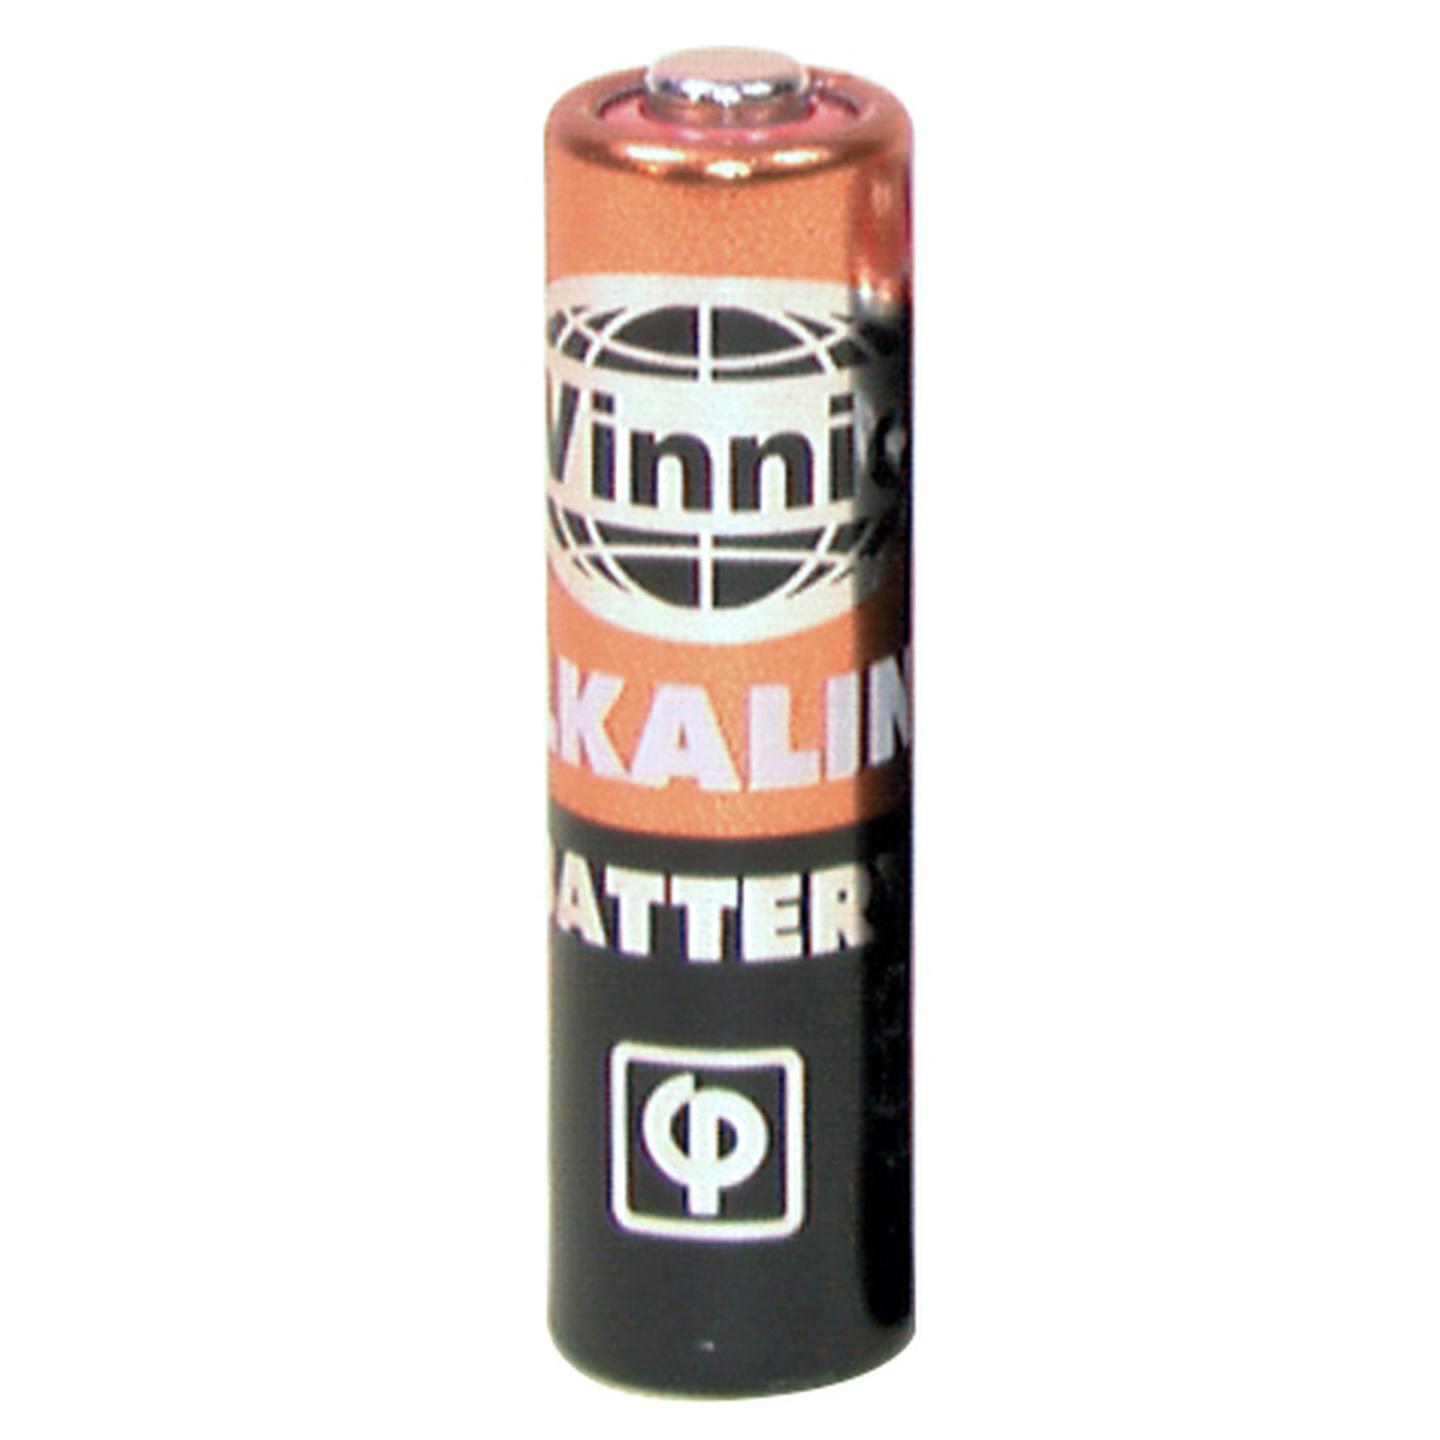 27A 12V Thin Car Alarm Alkaline Battery - Vinnic